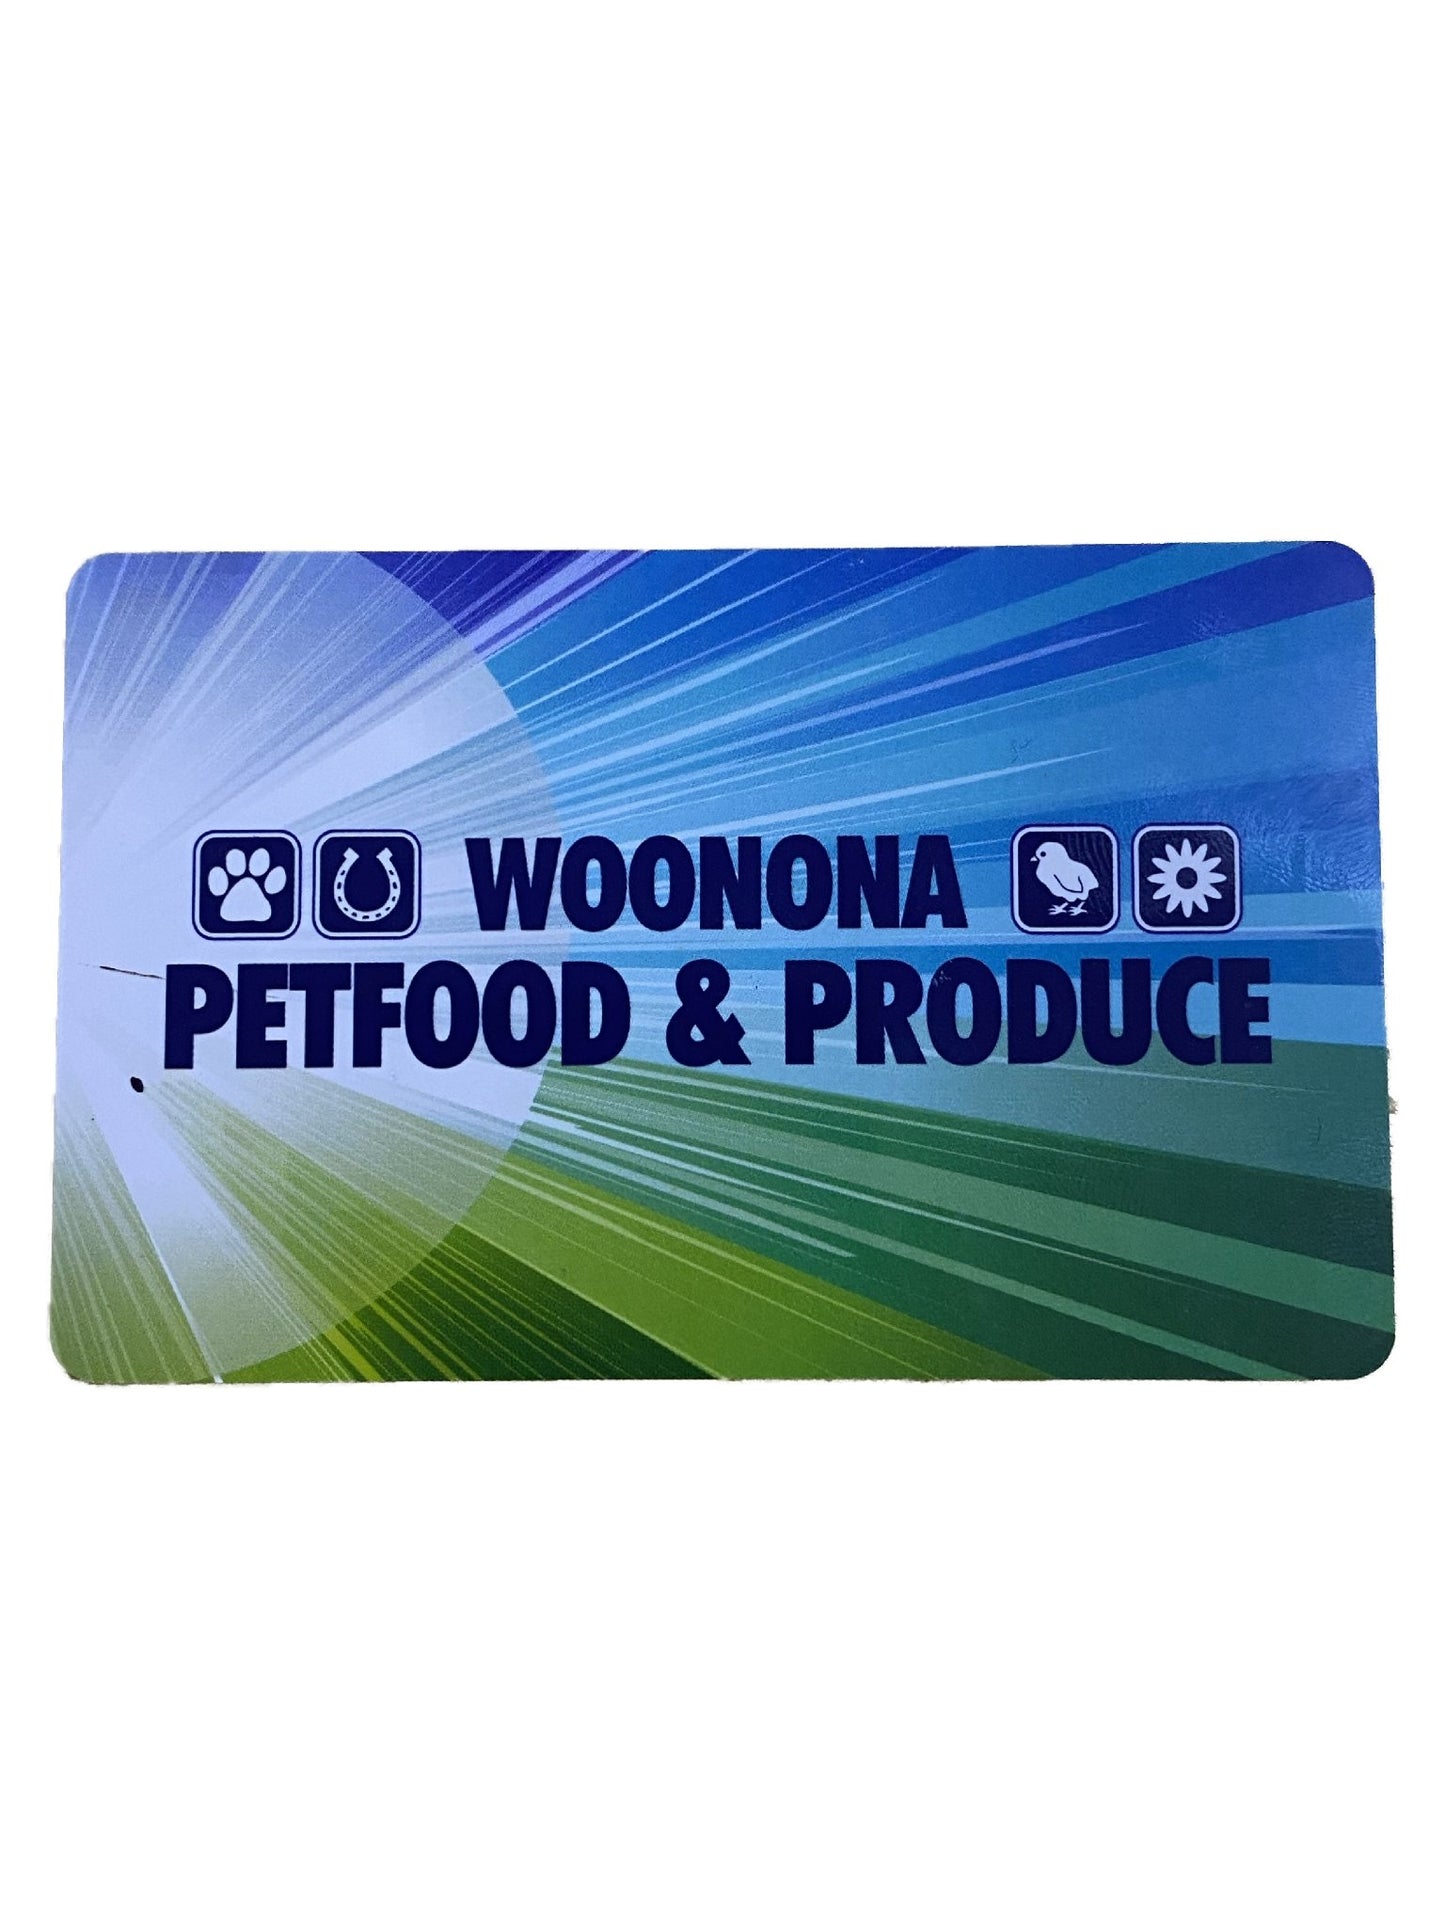 Physical Gift Card - Woonona Petfood & Produce